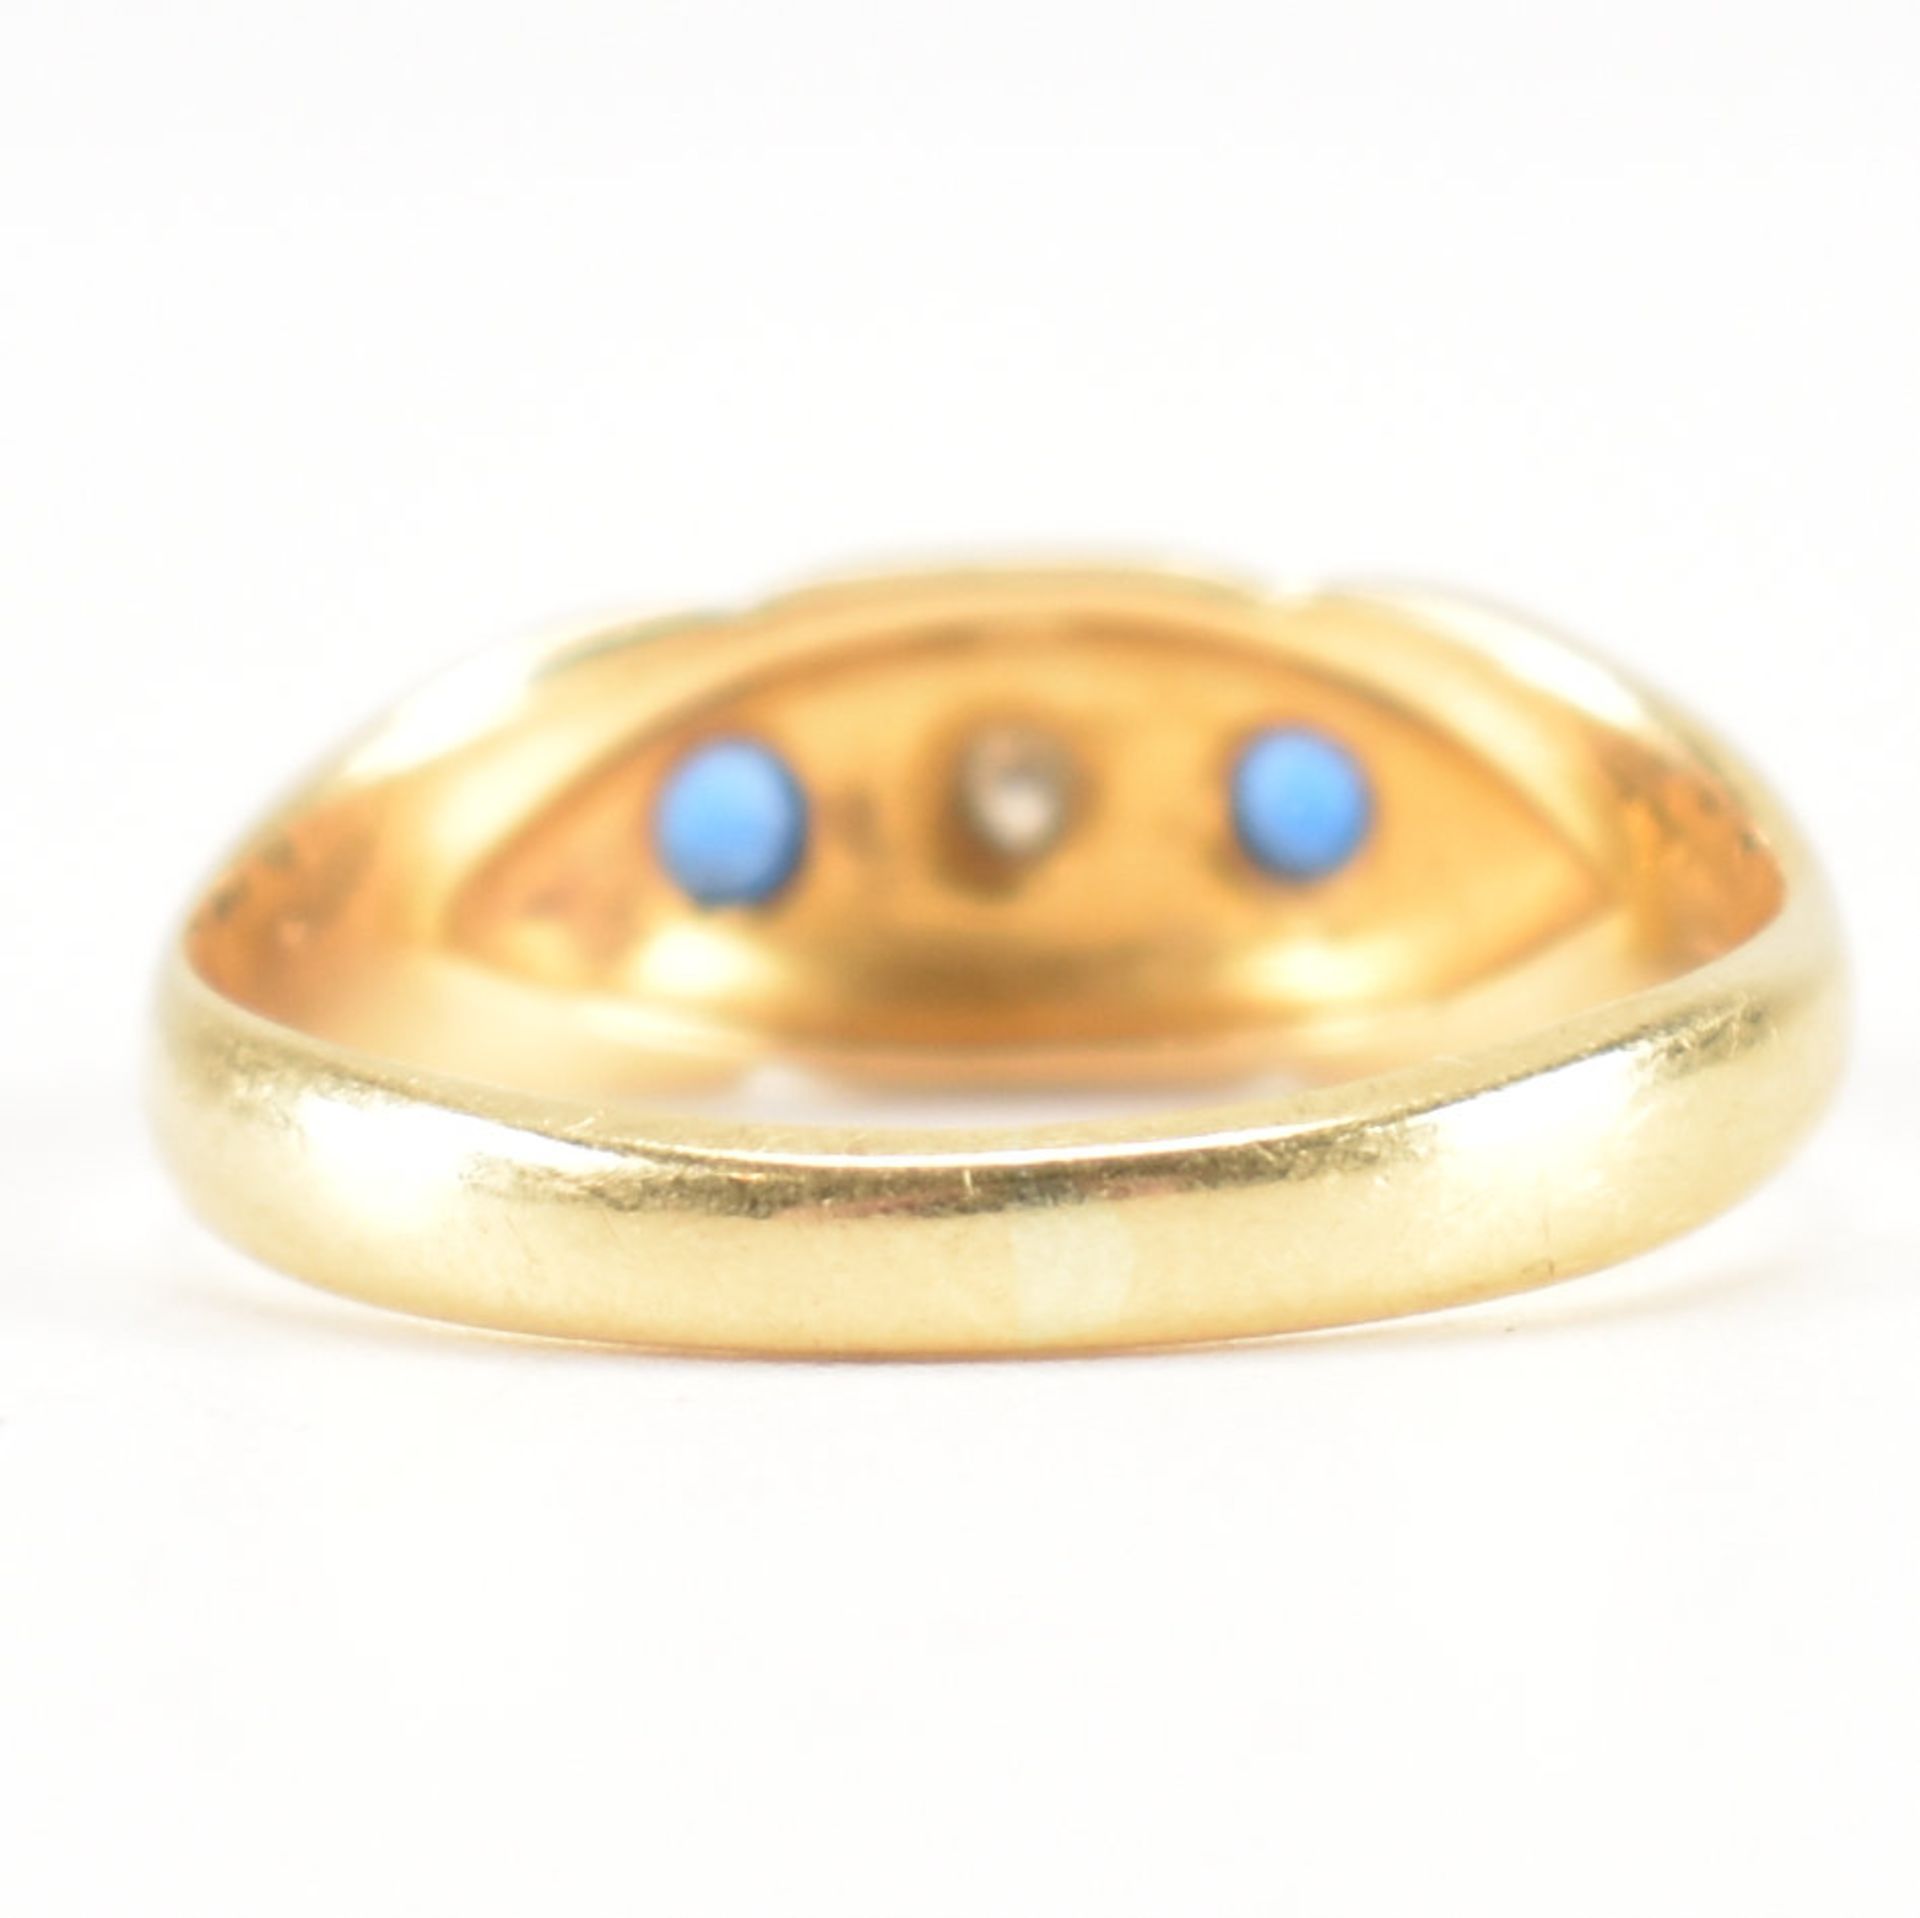 HALLMARKED 18CT GOLD DIAMOND & BLUE STONE RING - Image 5 of 9